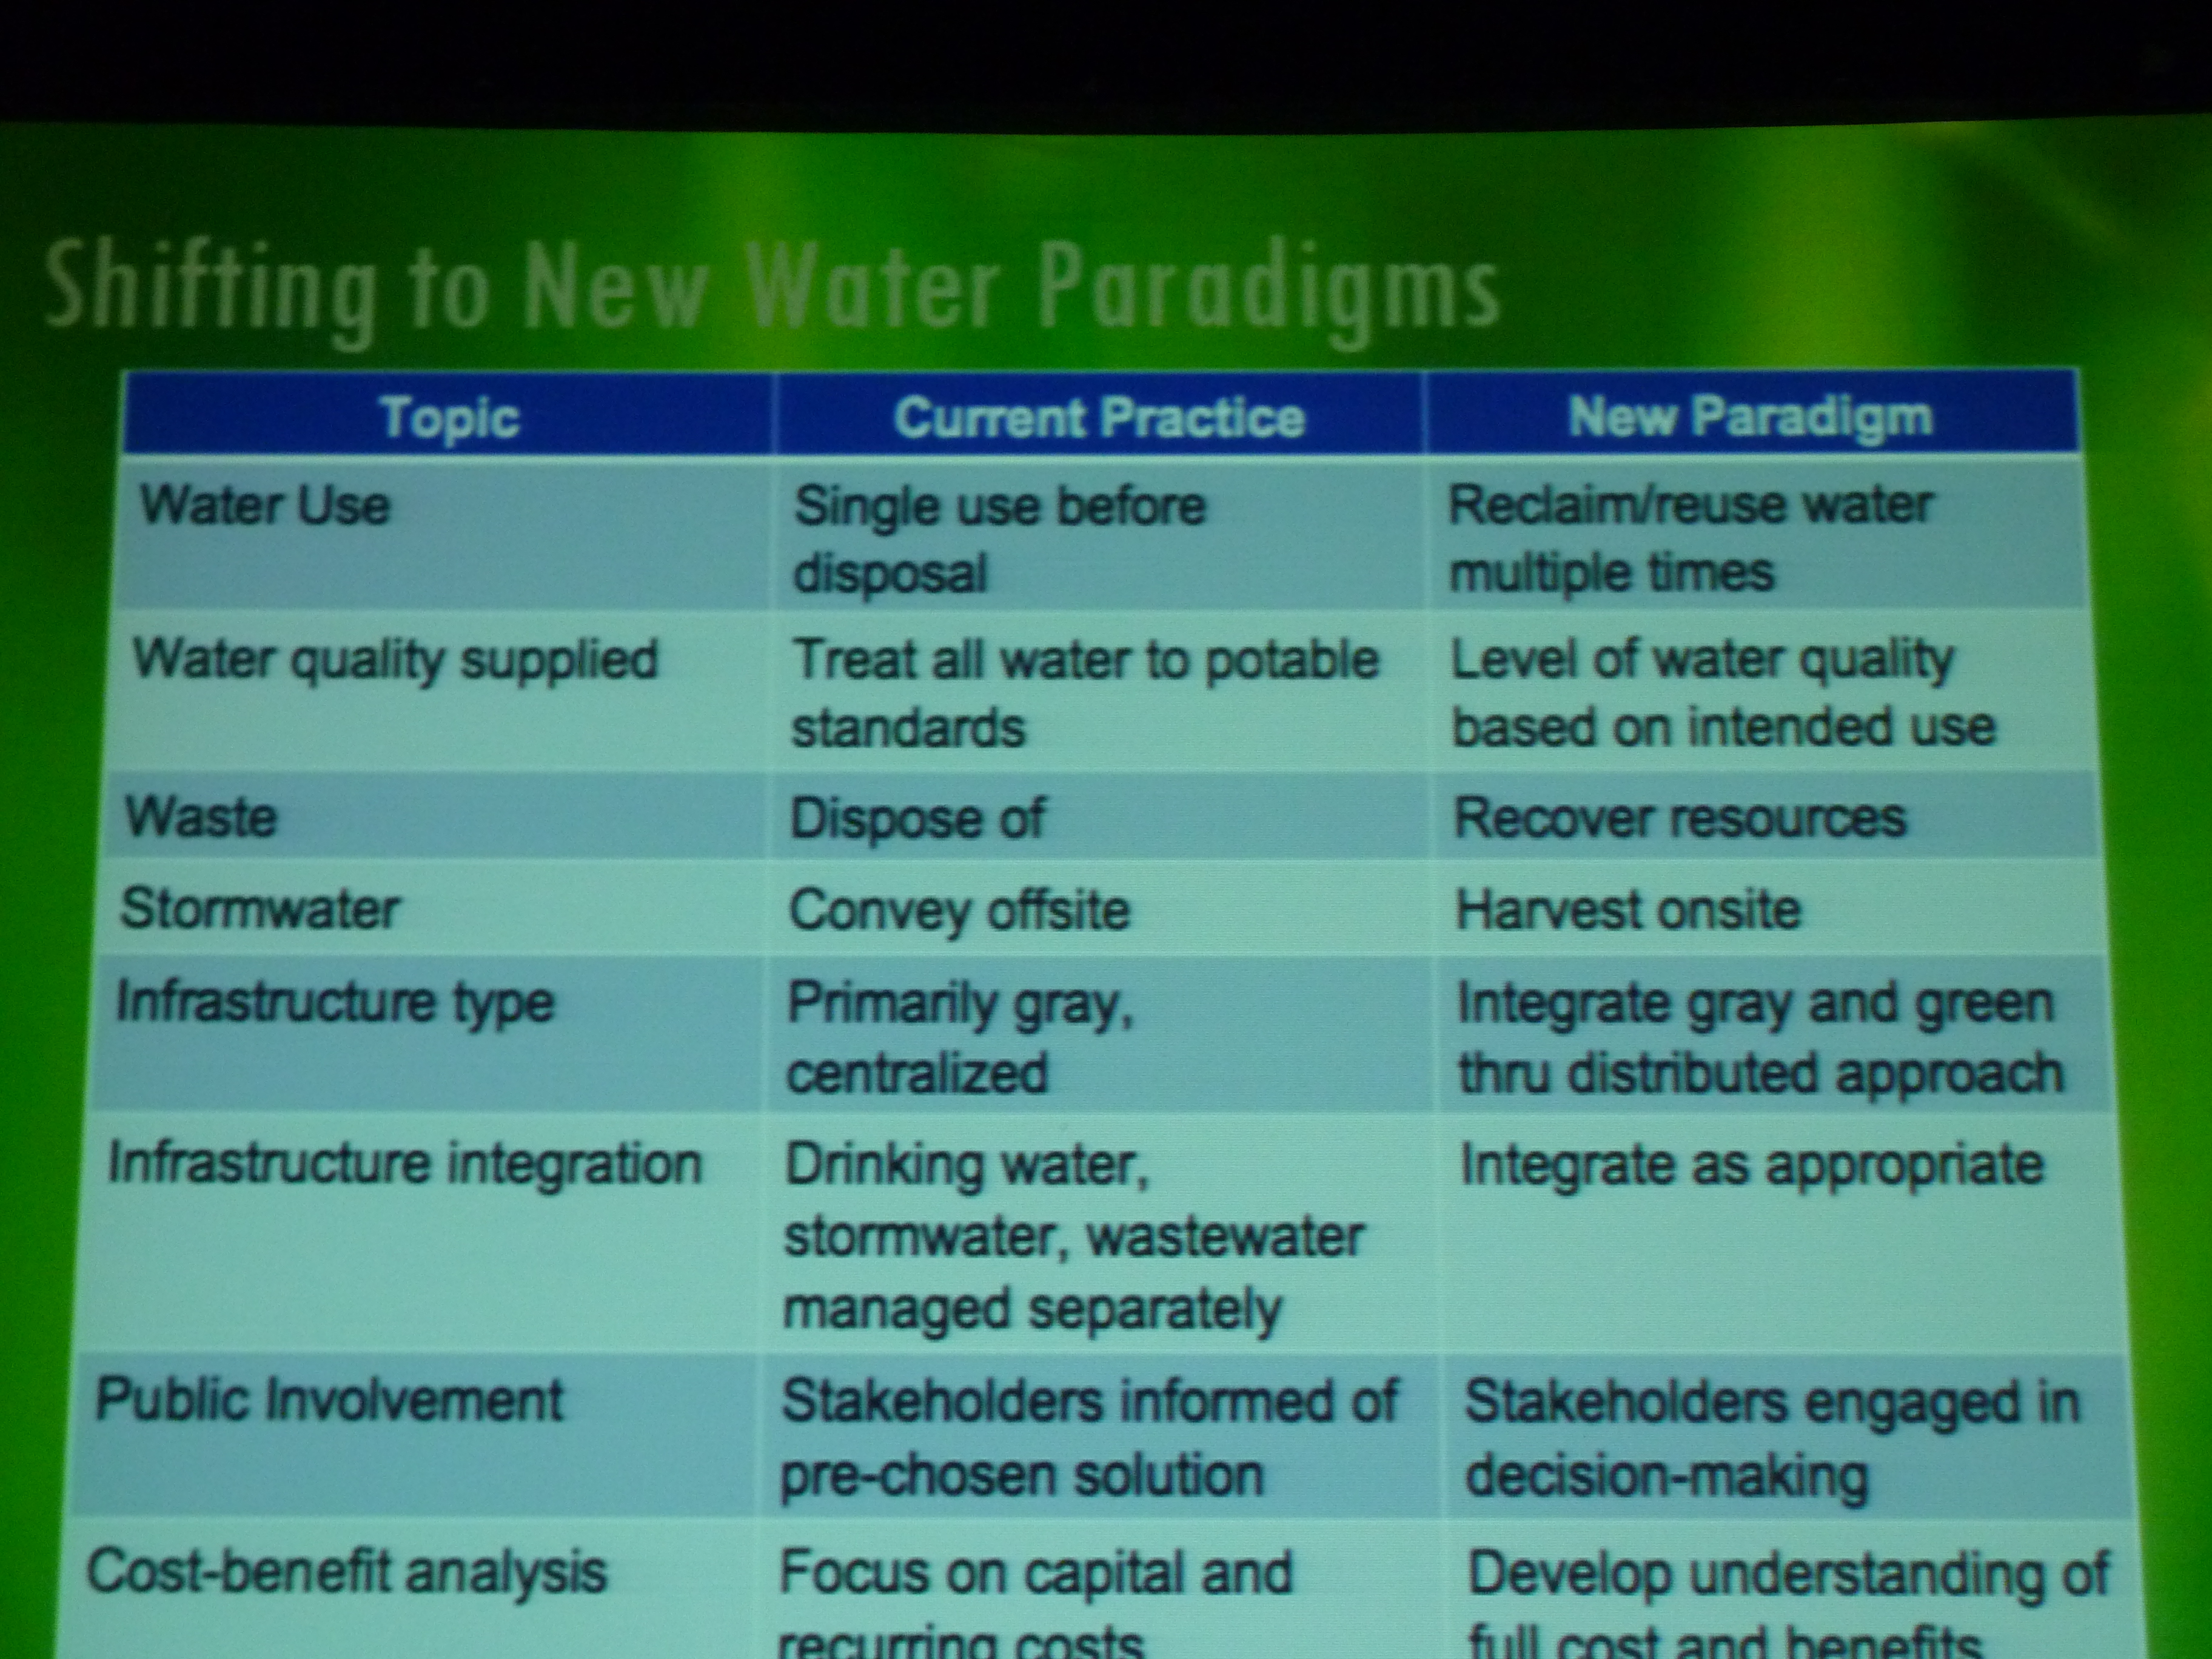 New water paradigms